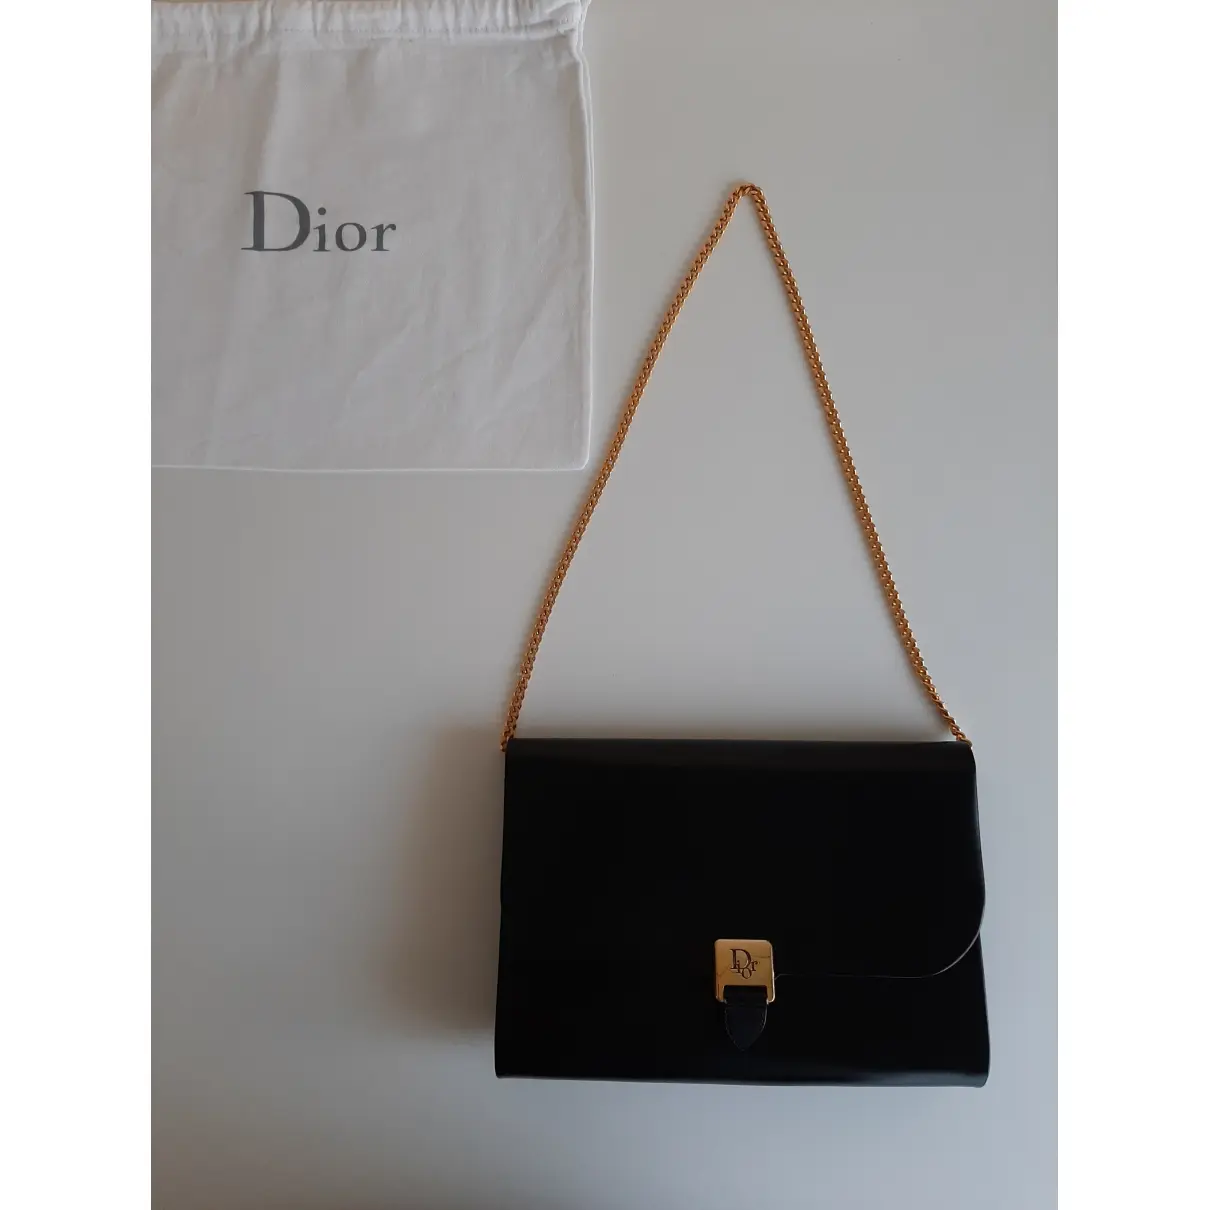 Patent leather clutch bag Dior - Vintage